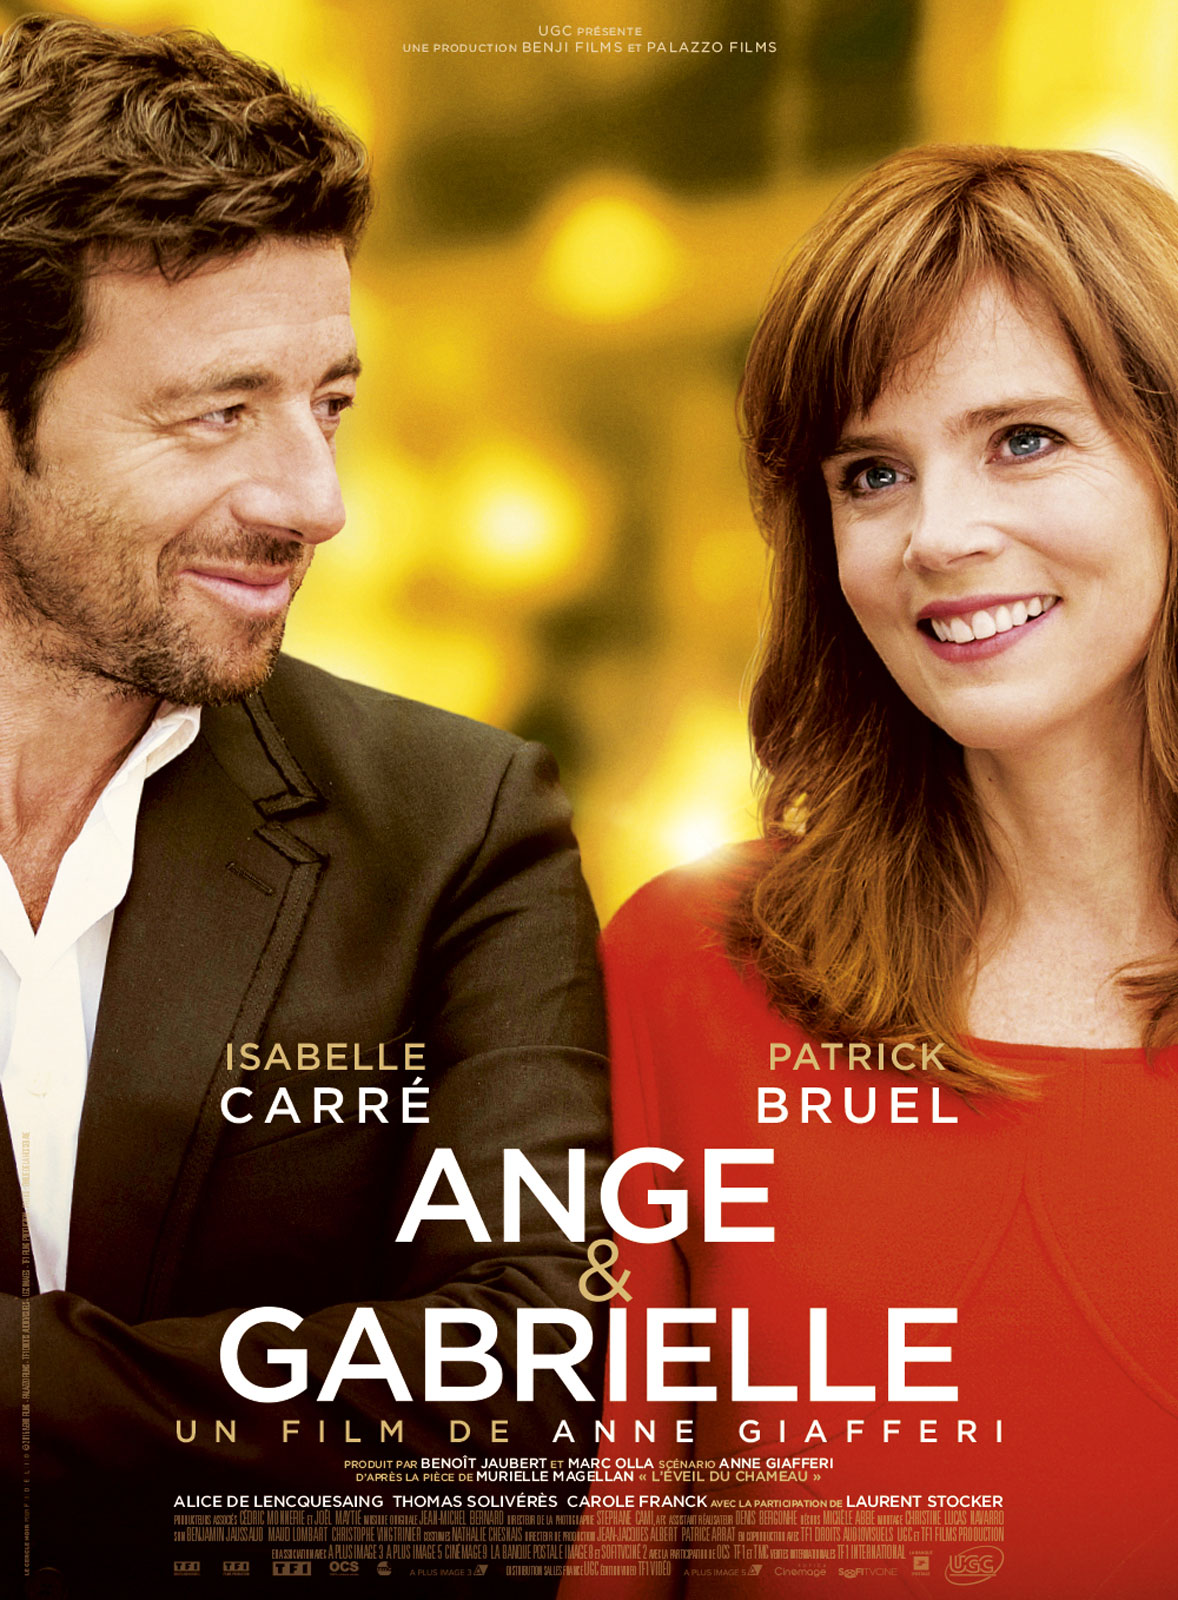 Ange & Gabrielle, un film d’Anne Giafferi